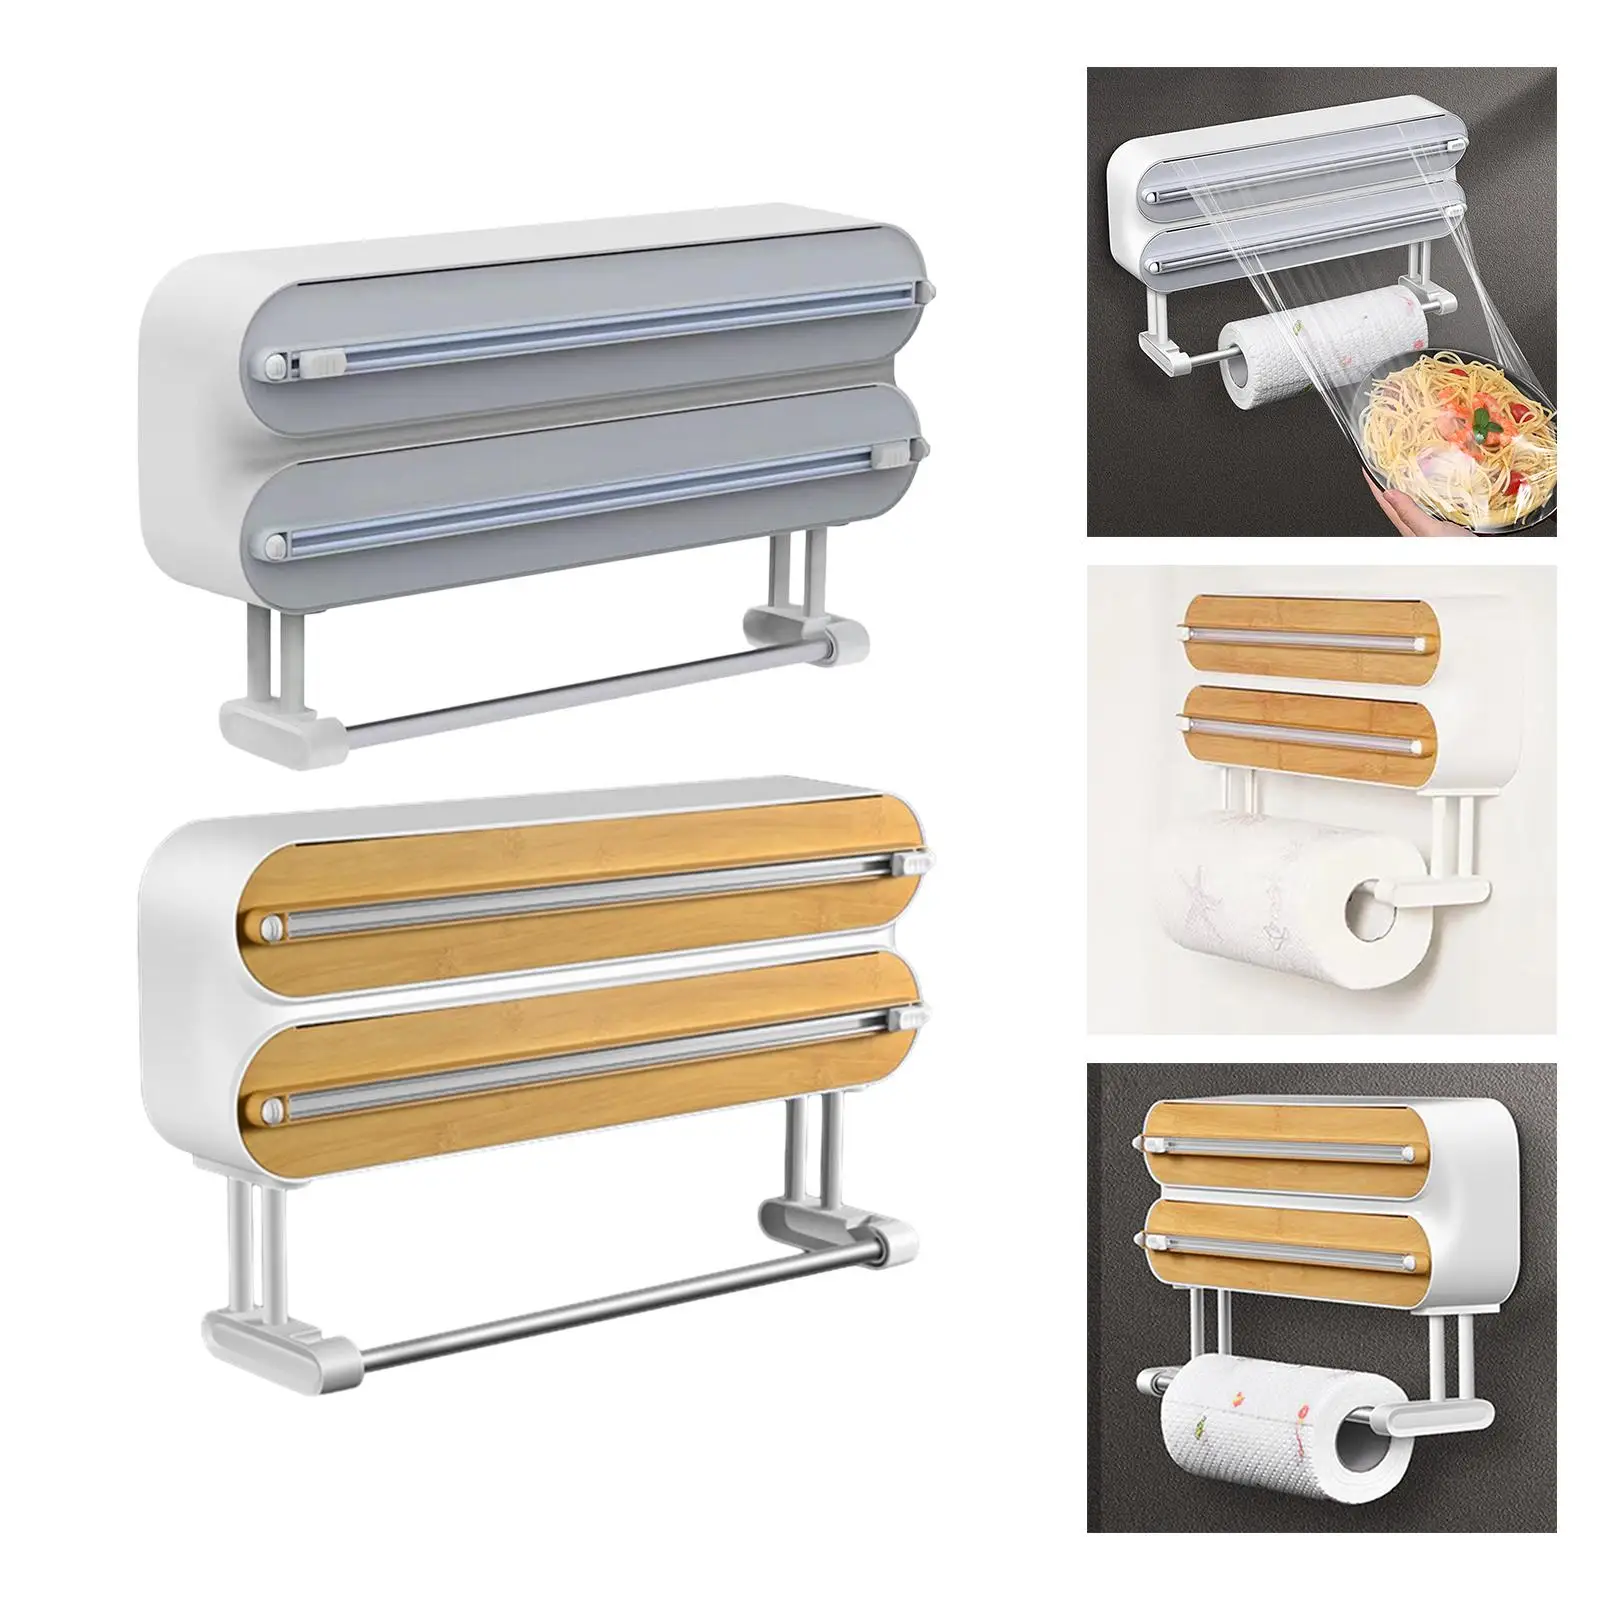 Cling Film Dispenser Slide Cutter Household Food Wrap Cutter Multipurpose for Kitchen Desktop Household Refrigerator Baking